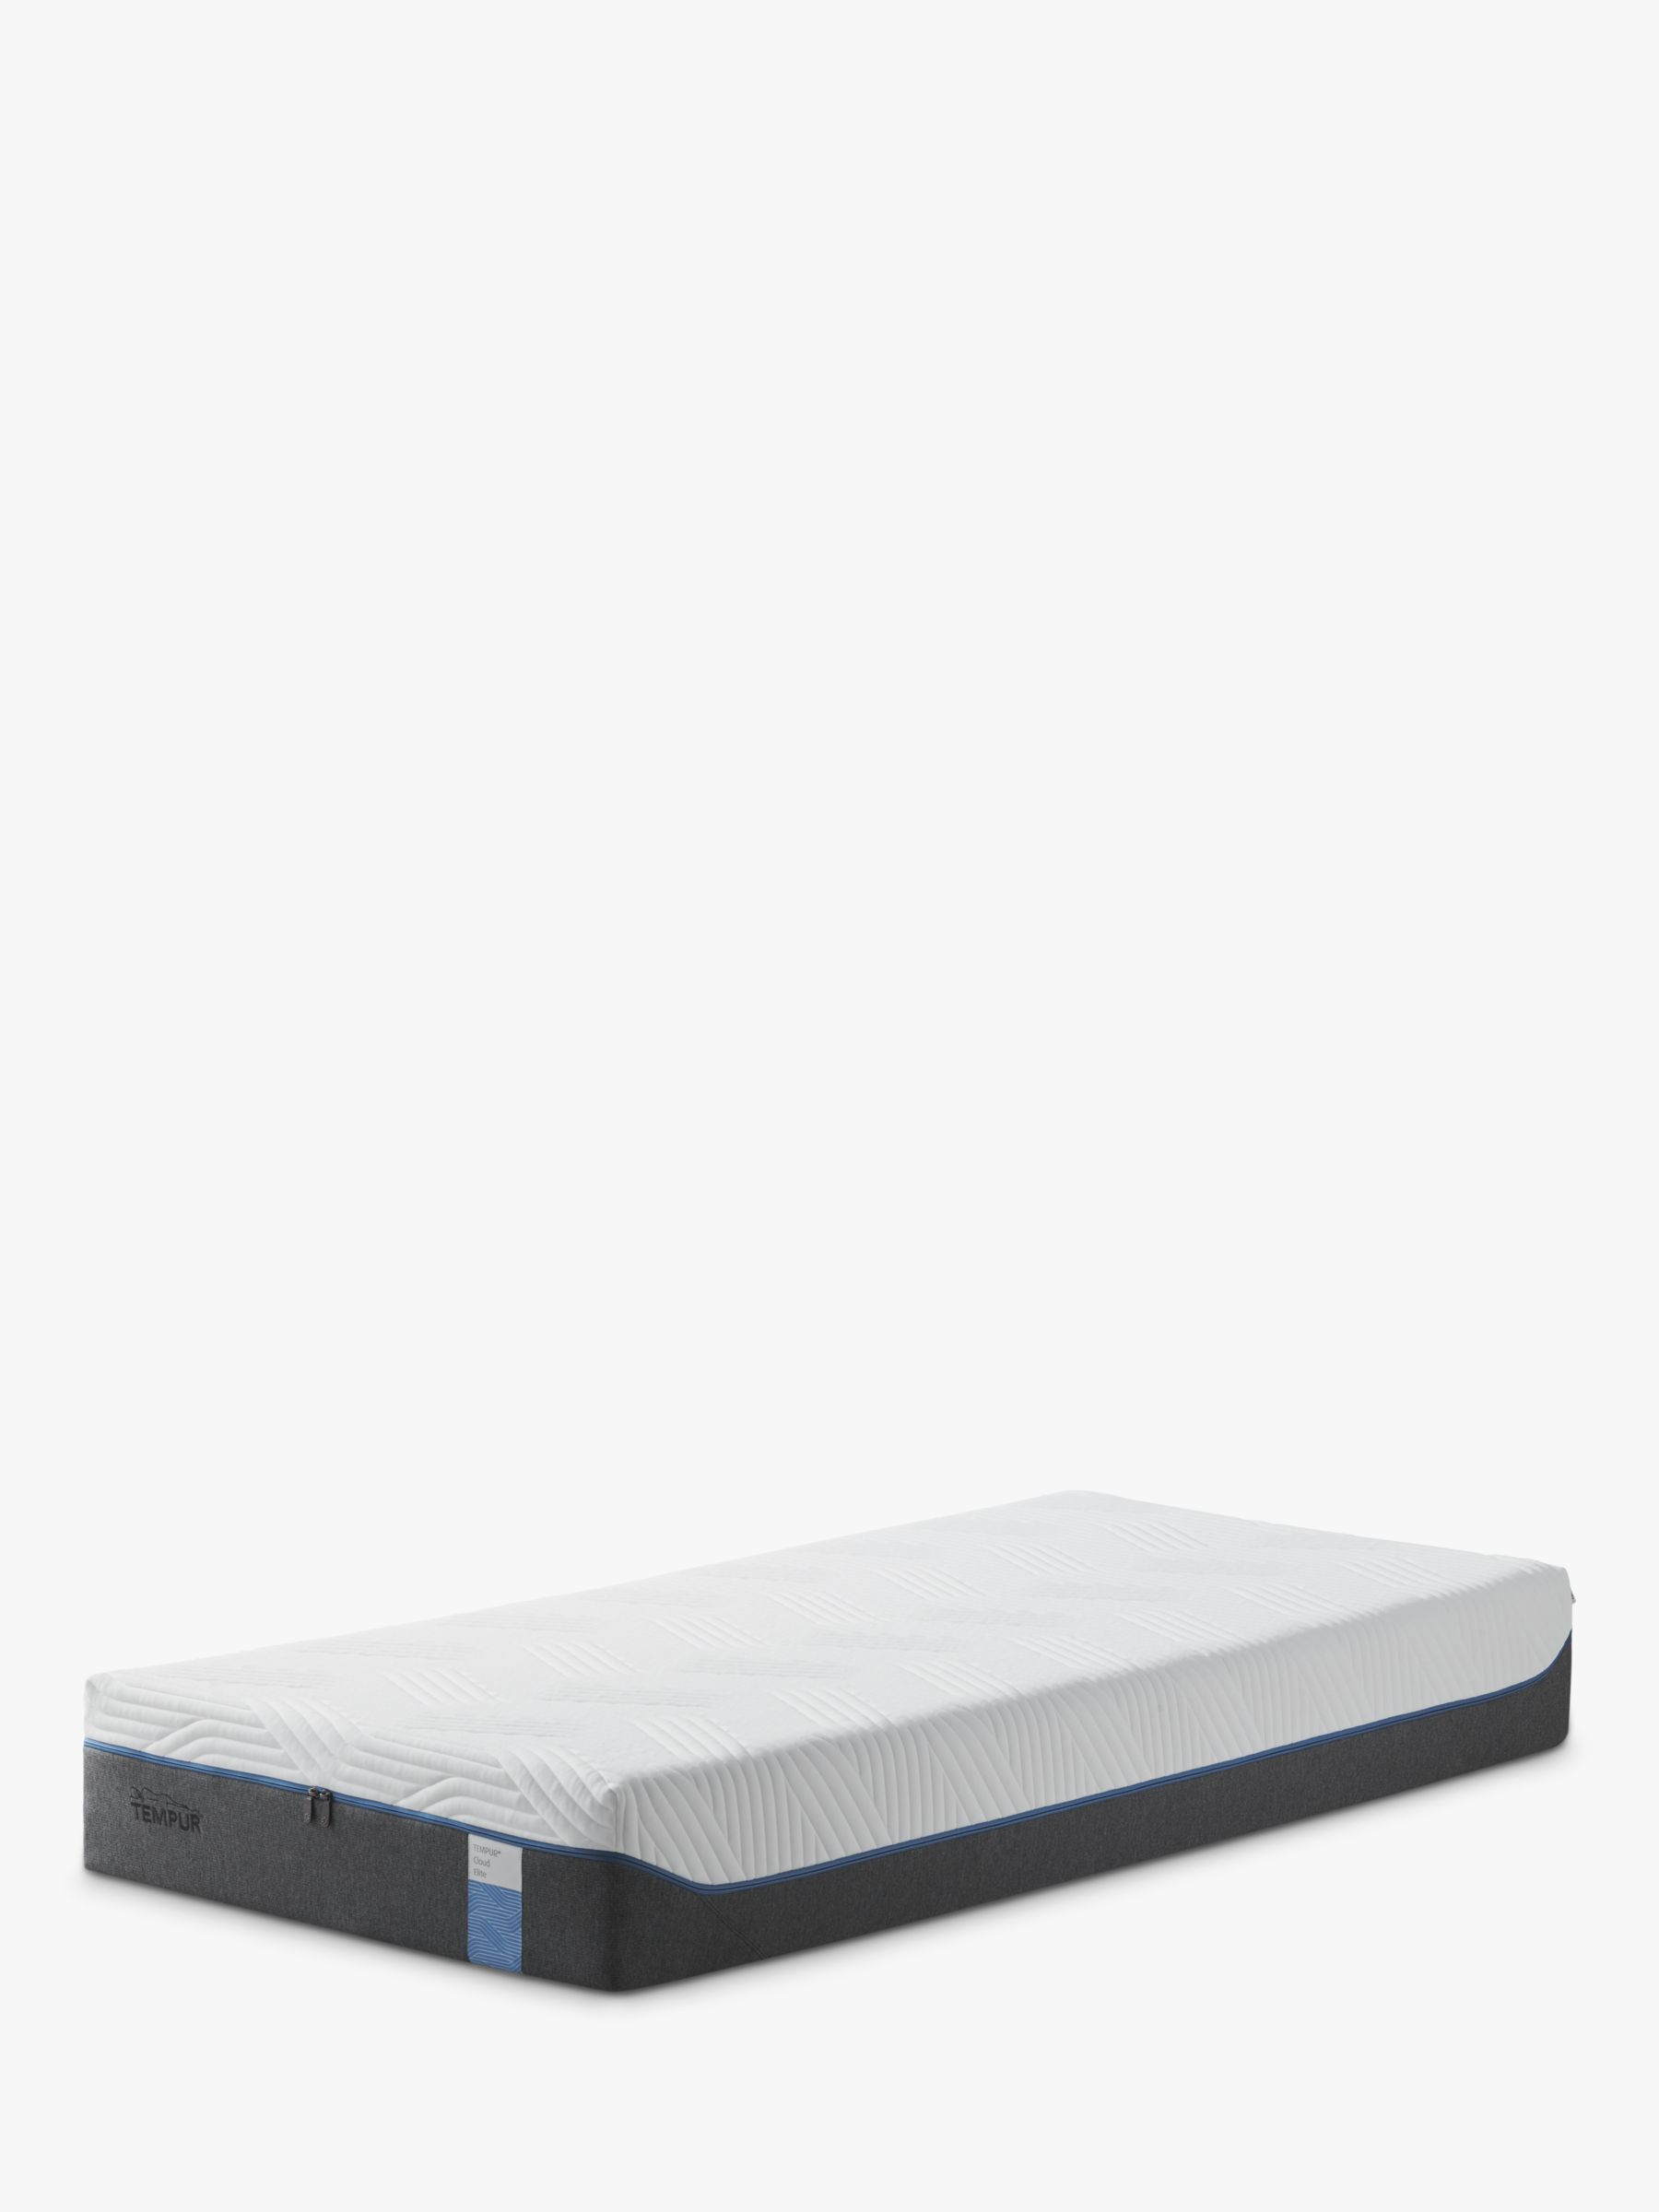 Photo of Tempur® cloud elite memory foam mattress soft single